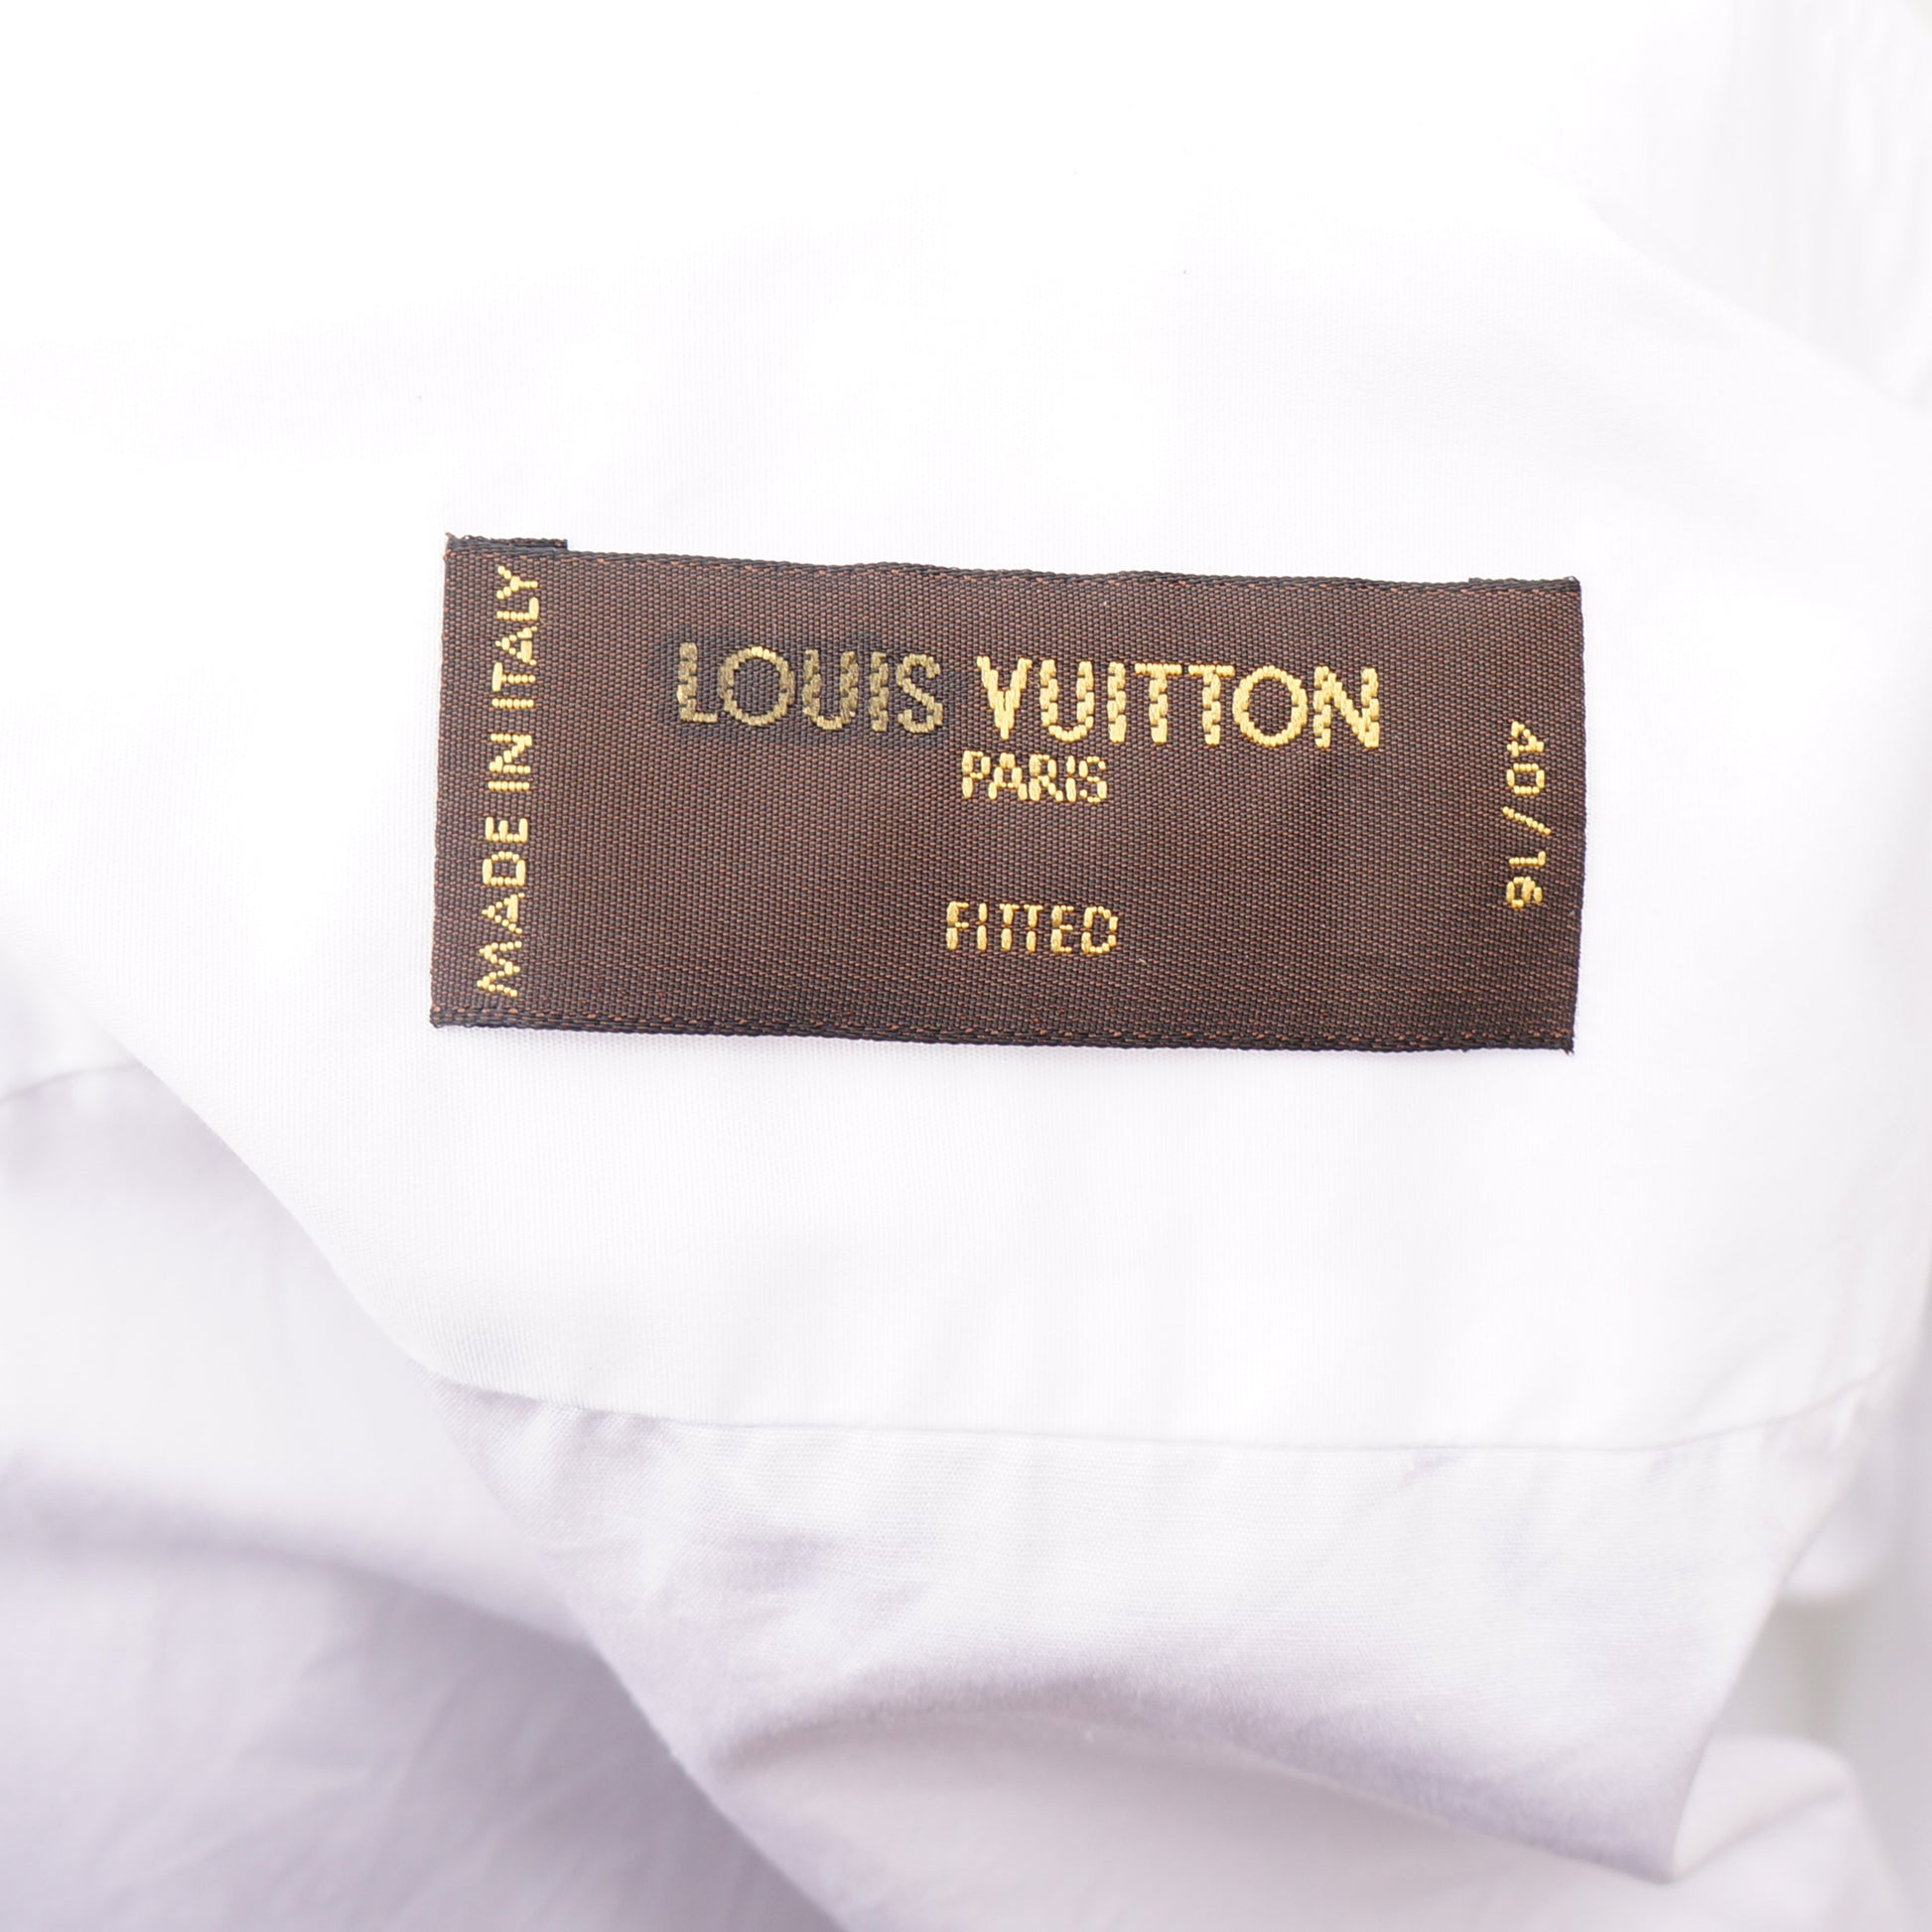 LOUIS VUITTON WHITE COTTON ROUND CUFF DRESS SHIRT - leefluxury.com